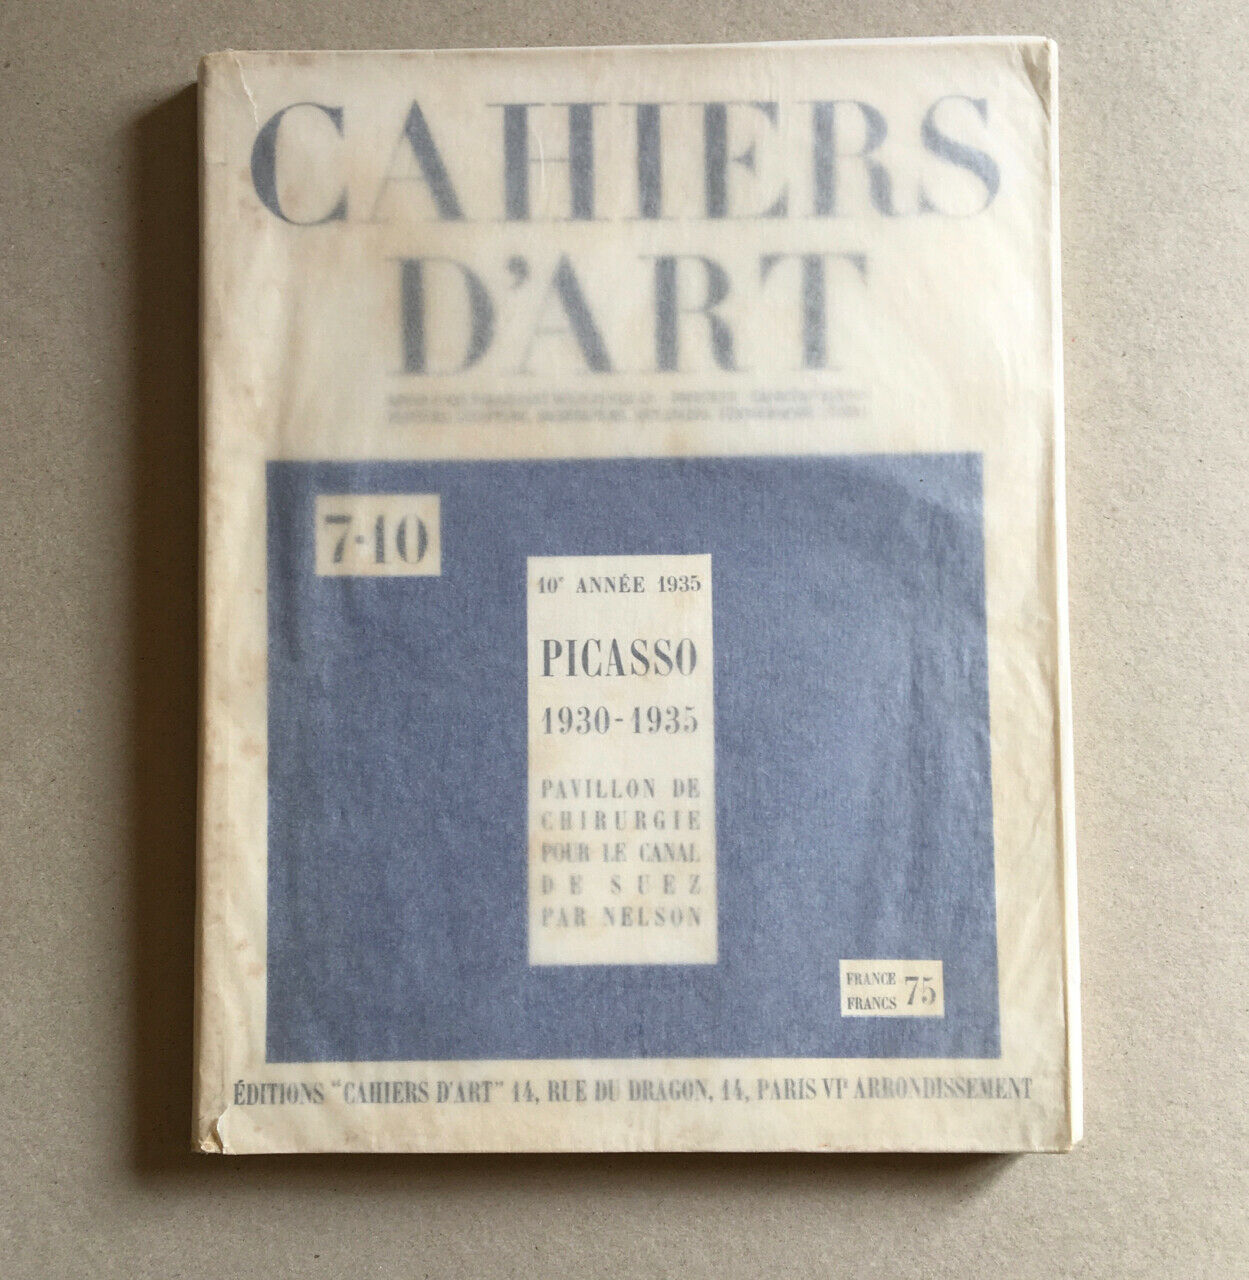 Christian Zervos, André Breton, Dali — Cahiers d'art n° 7-10 — Picasso 1930-1935